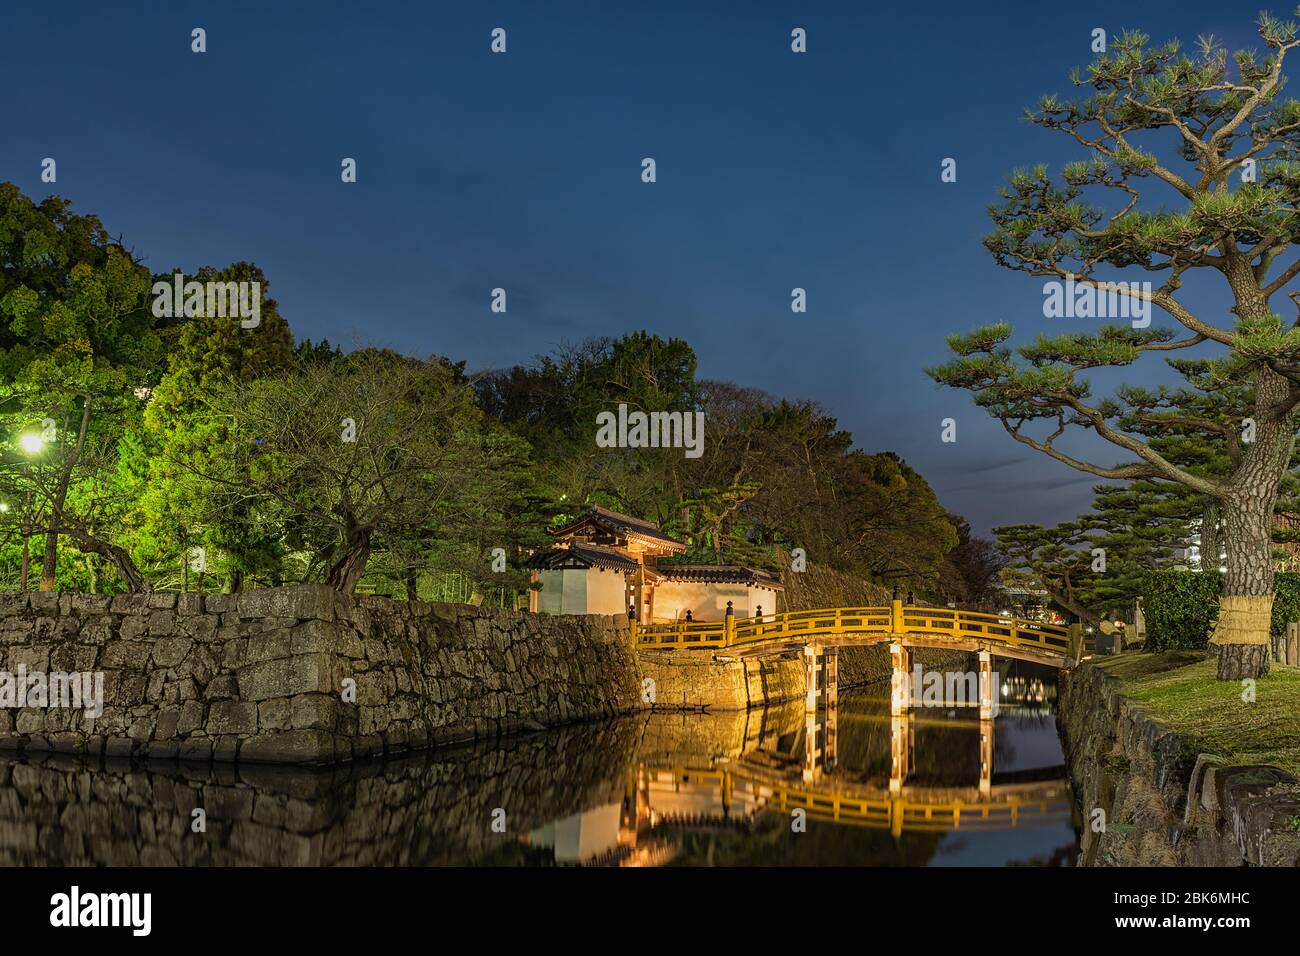 Evening view of the entrance to the Wakayama castle, old historic Japanese castle in Wakayama city, Japan Stock Photo